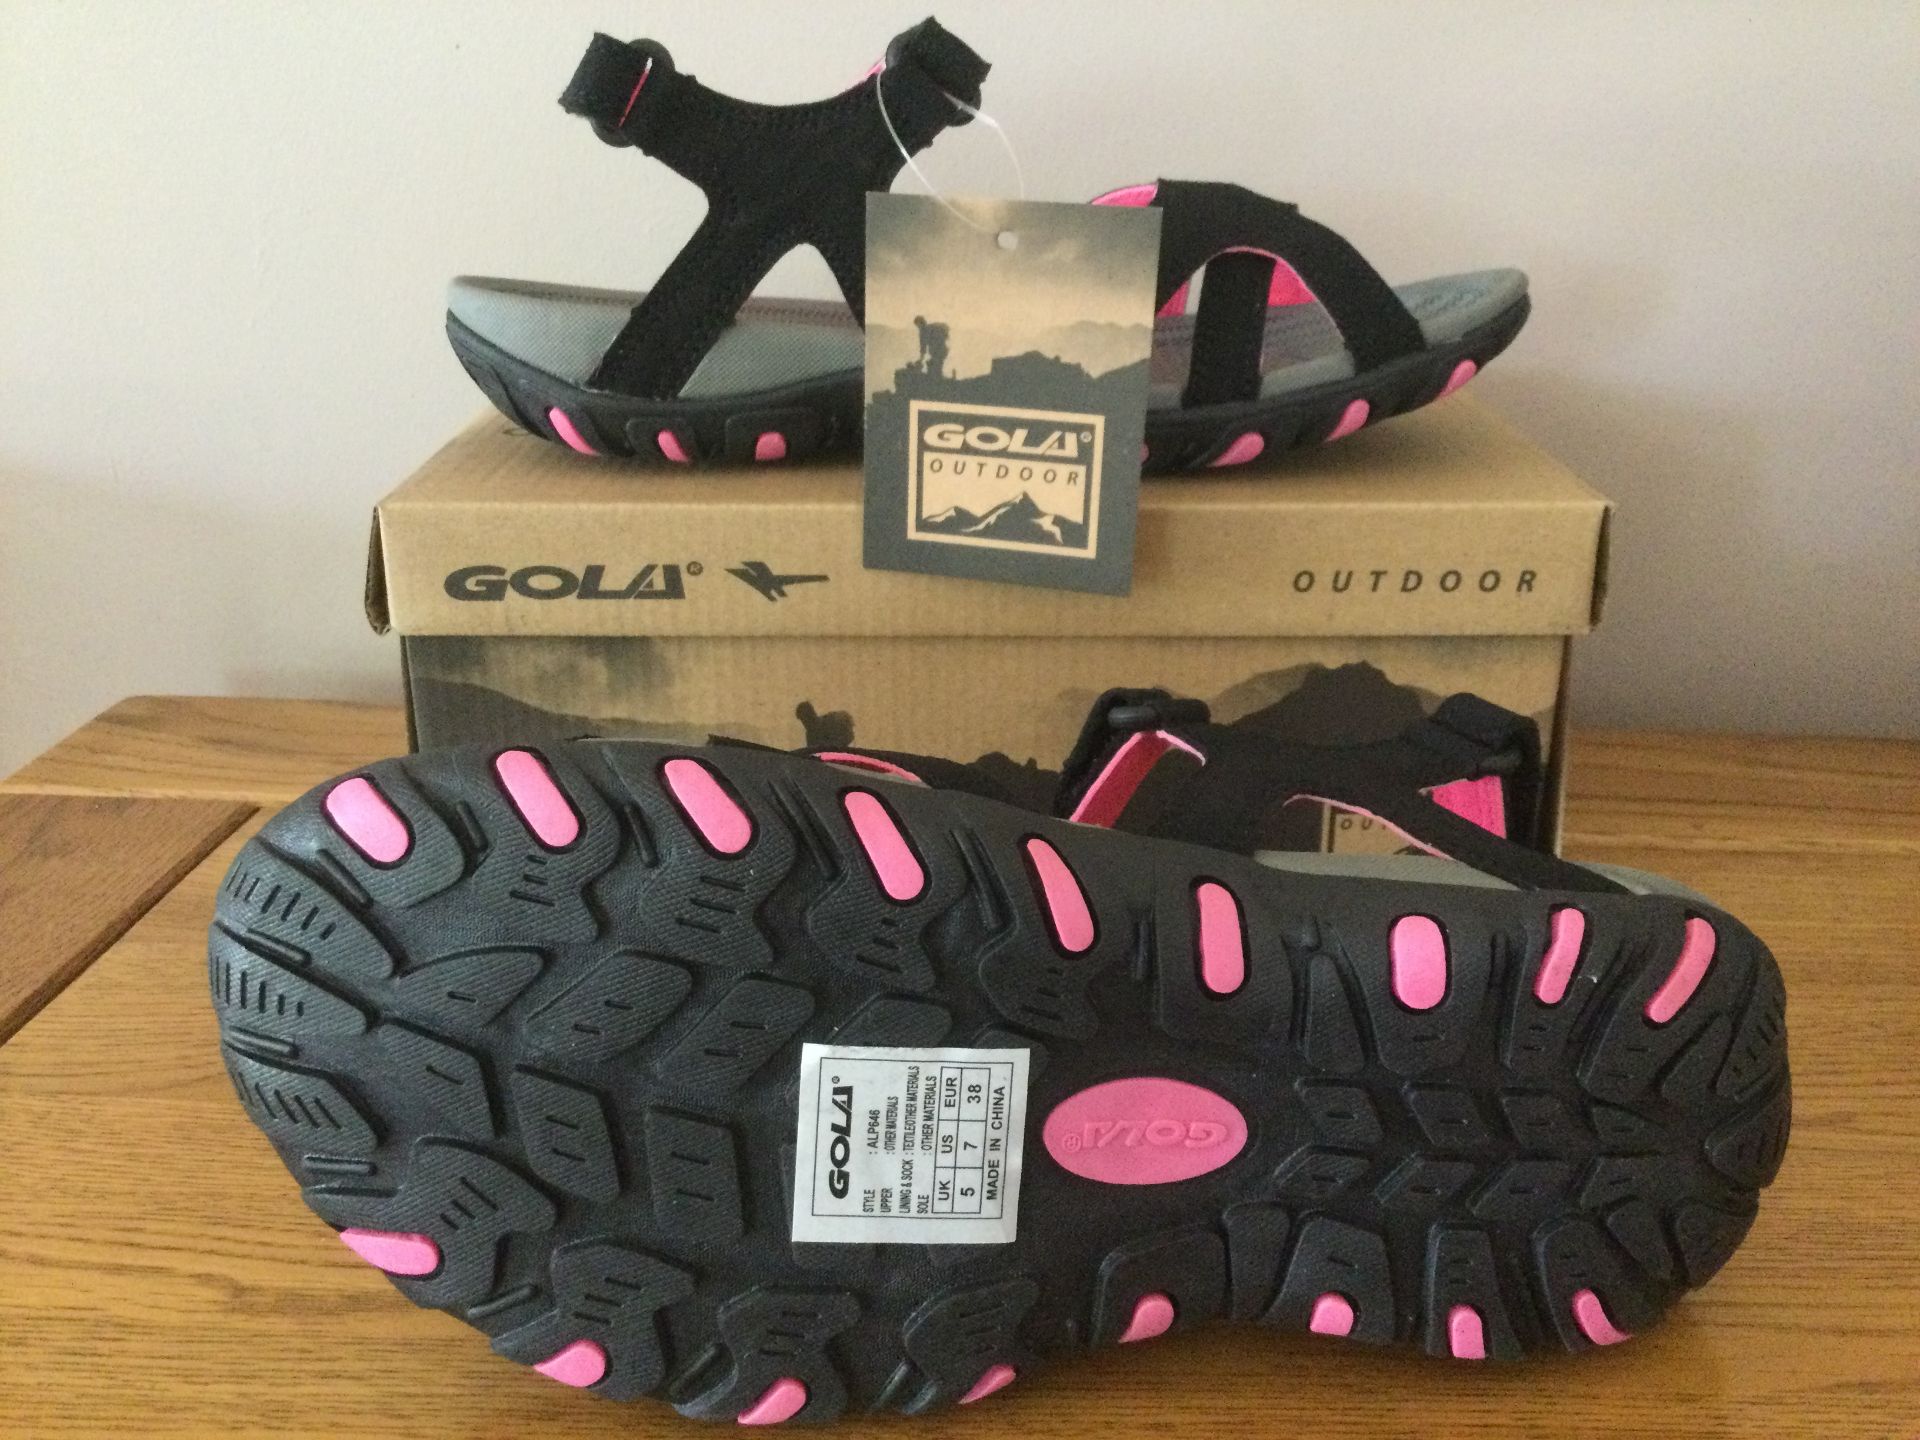 Gola Women's “Cedar” Hiking Sandals, Black/Hot Pink, Size 5 - Brand New - Image 3 of 4